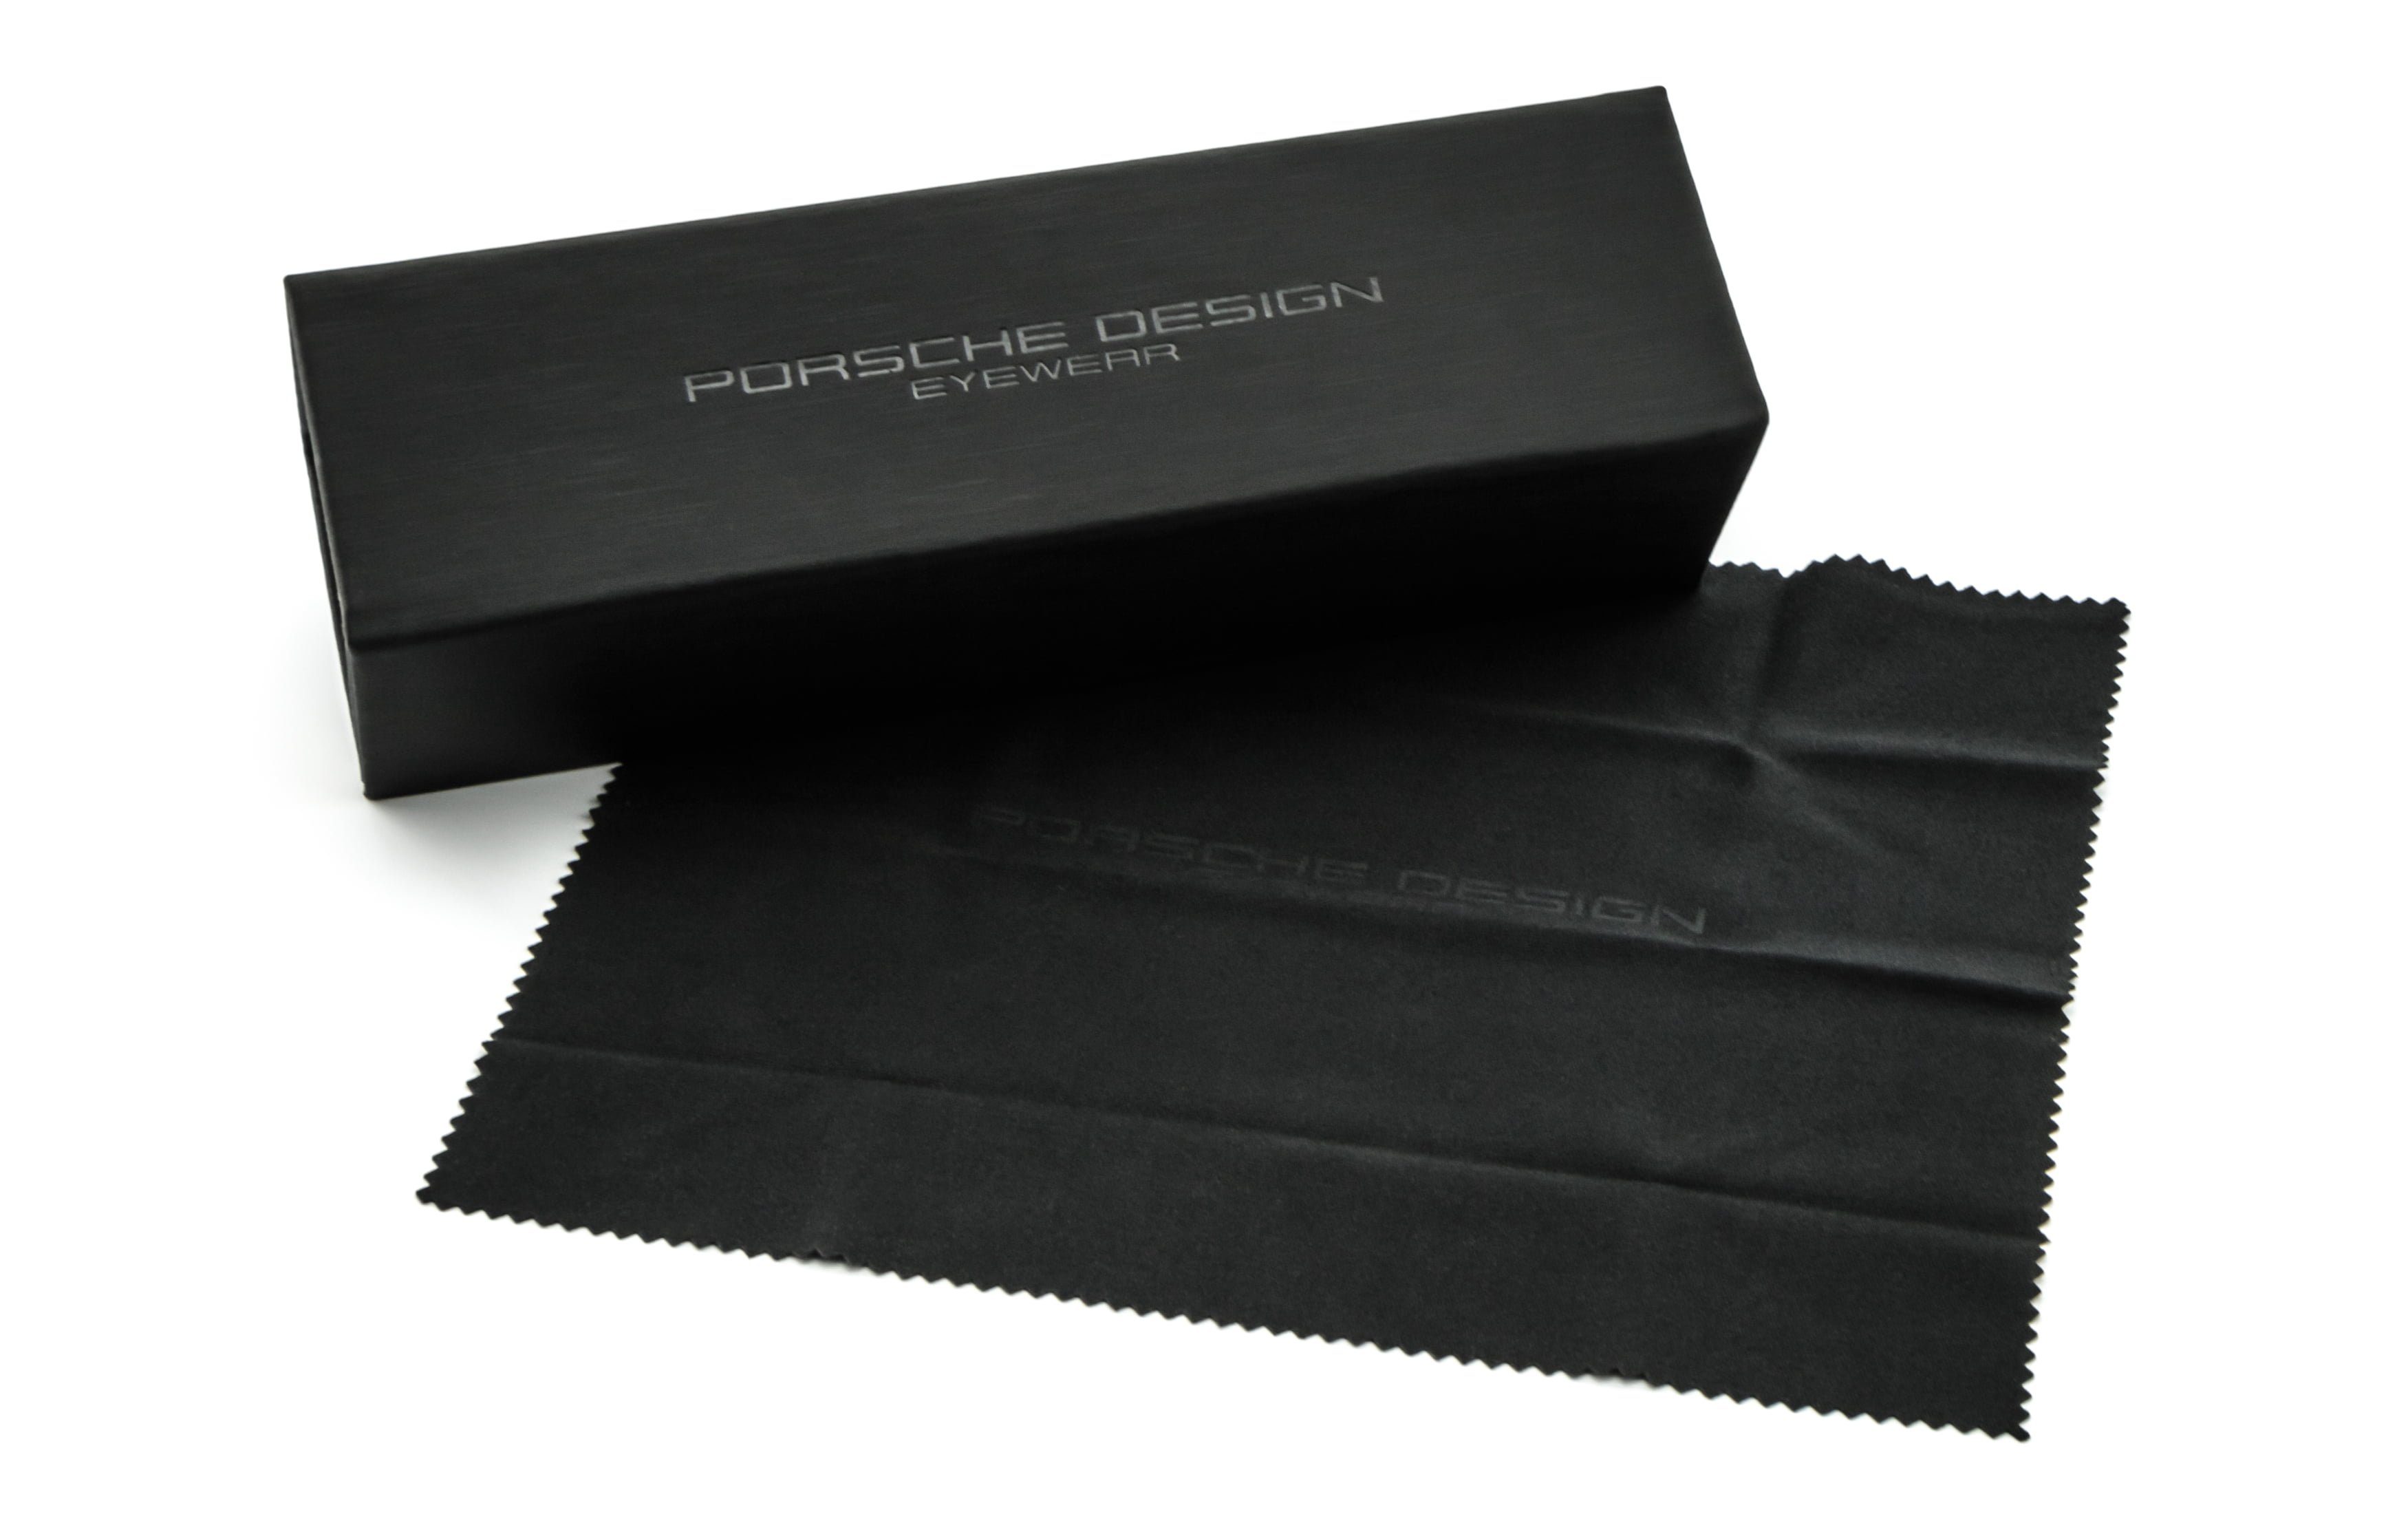 PORSCHE Design Brille HLT® POD8333A-n, Qualitätsgläser